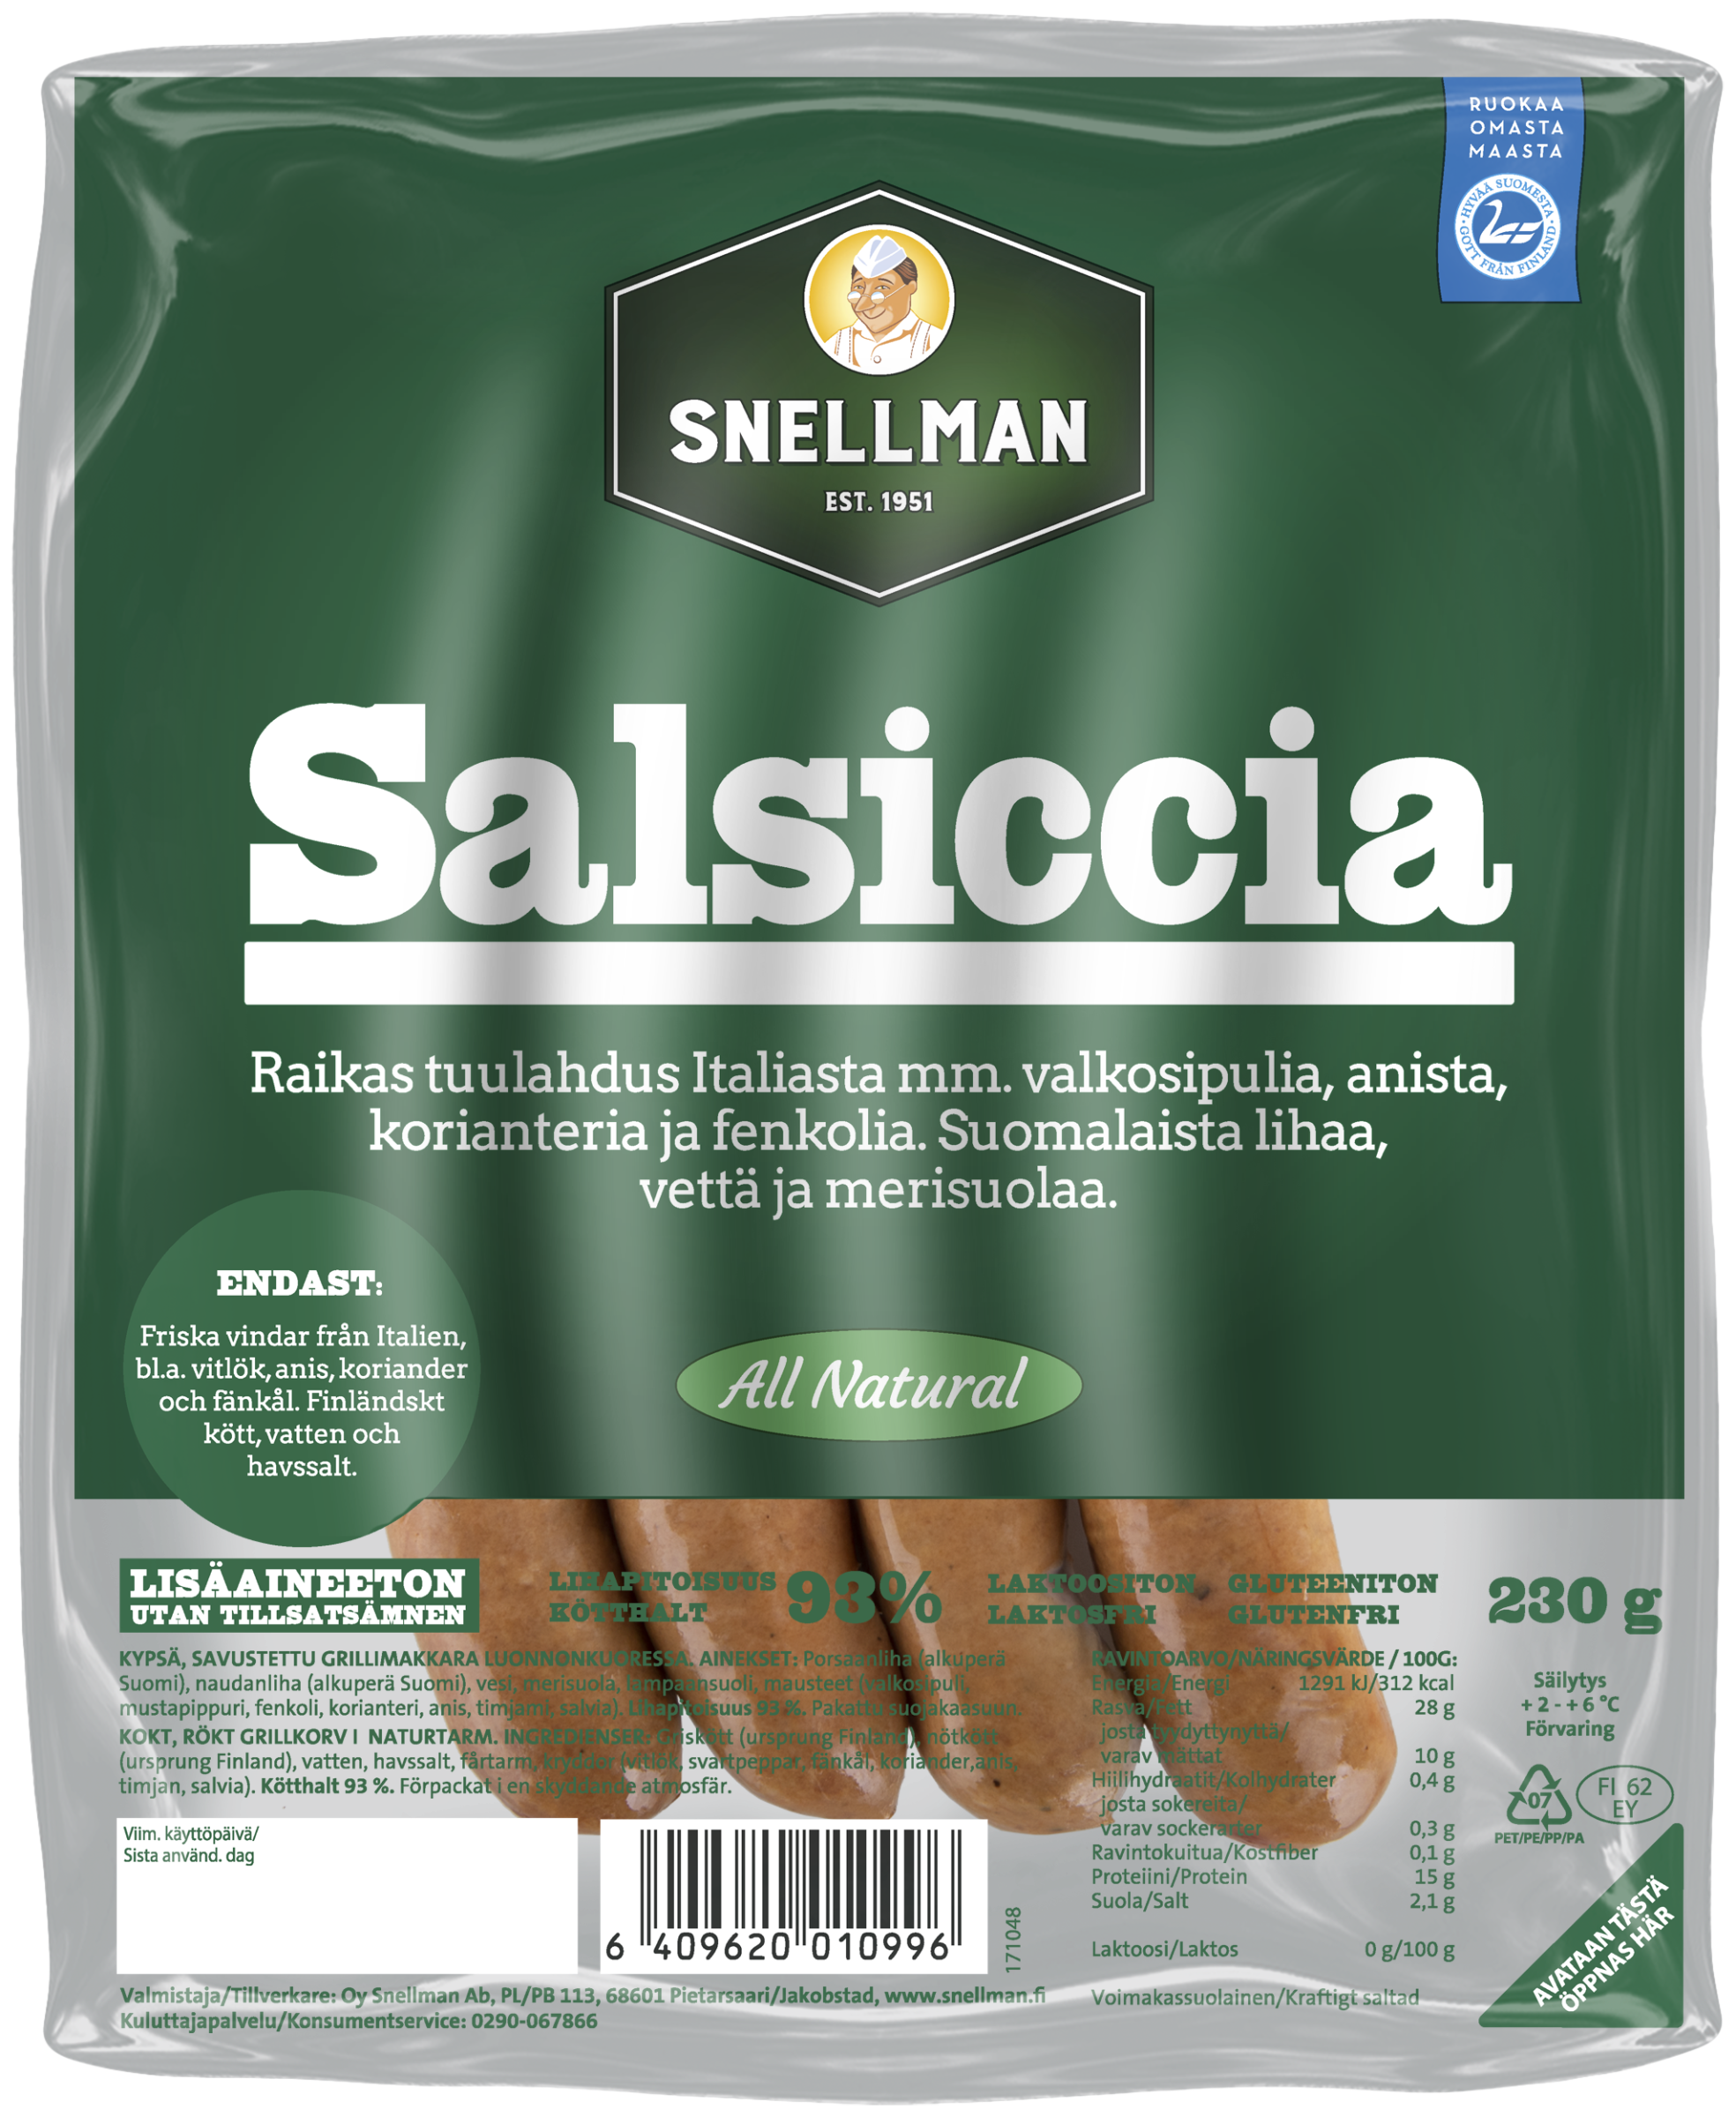 All Natural Salsiccia